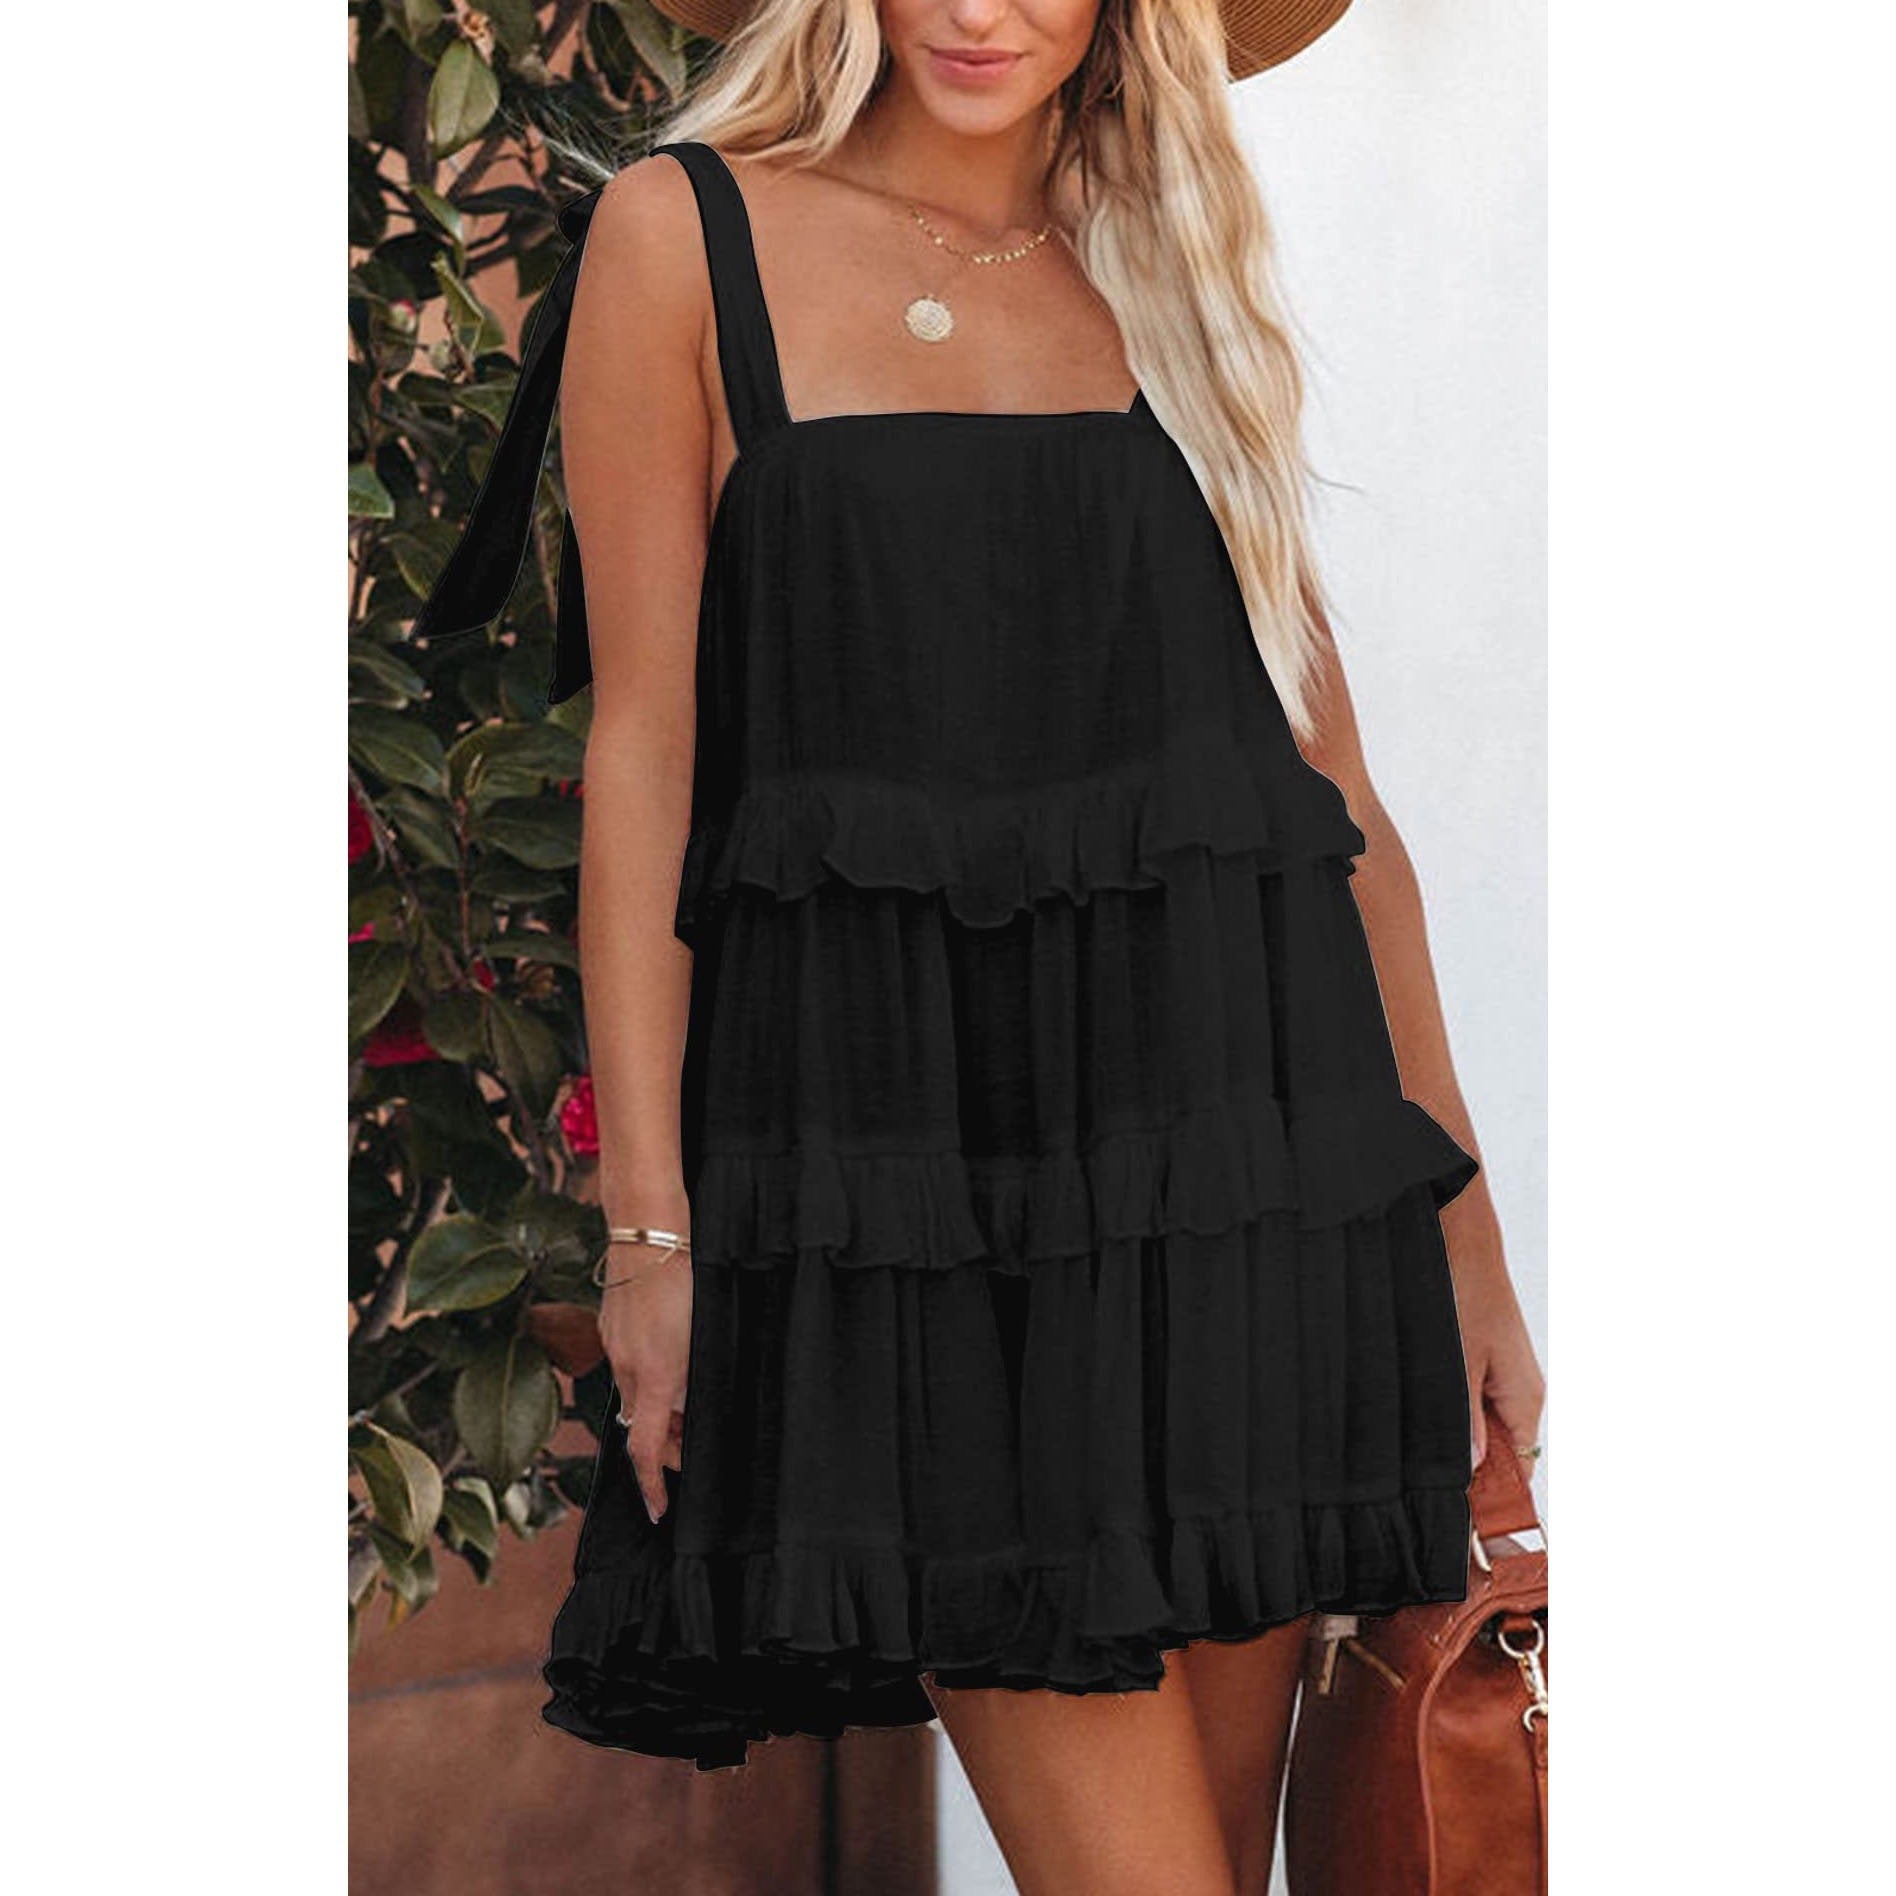 Casual Summer Ruffled Cake Style Mini Dresses-Dresses-Black-S-Free Shipping Leatheretro